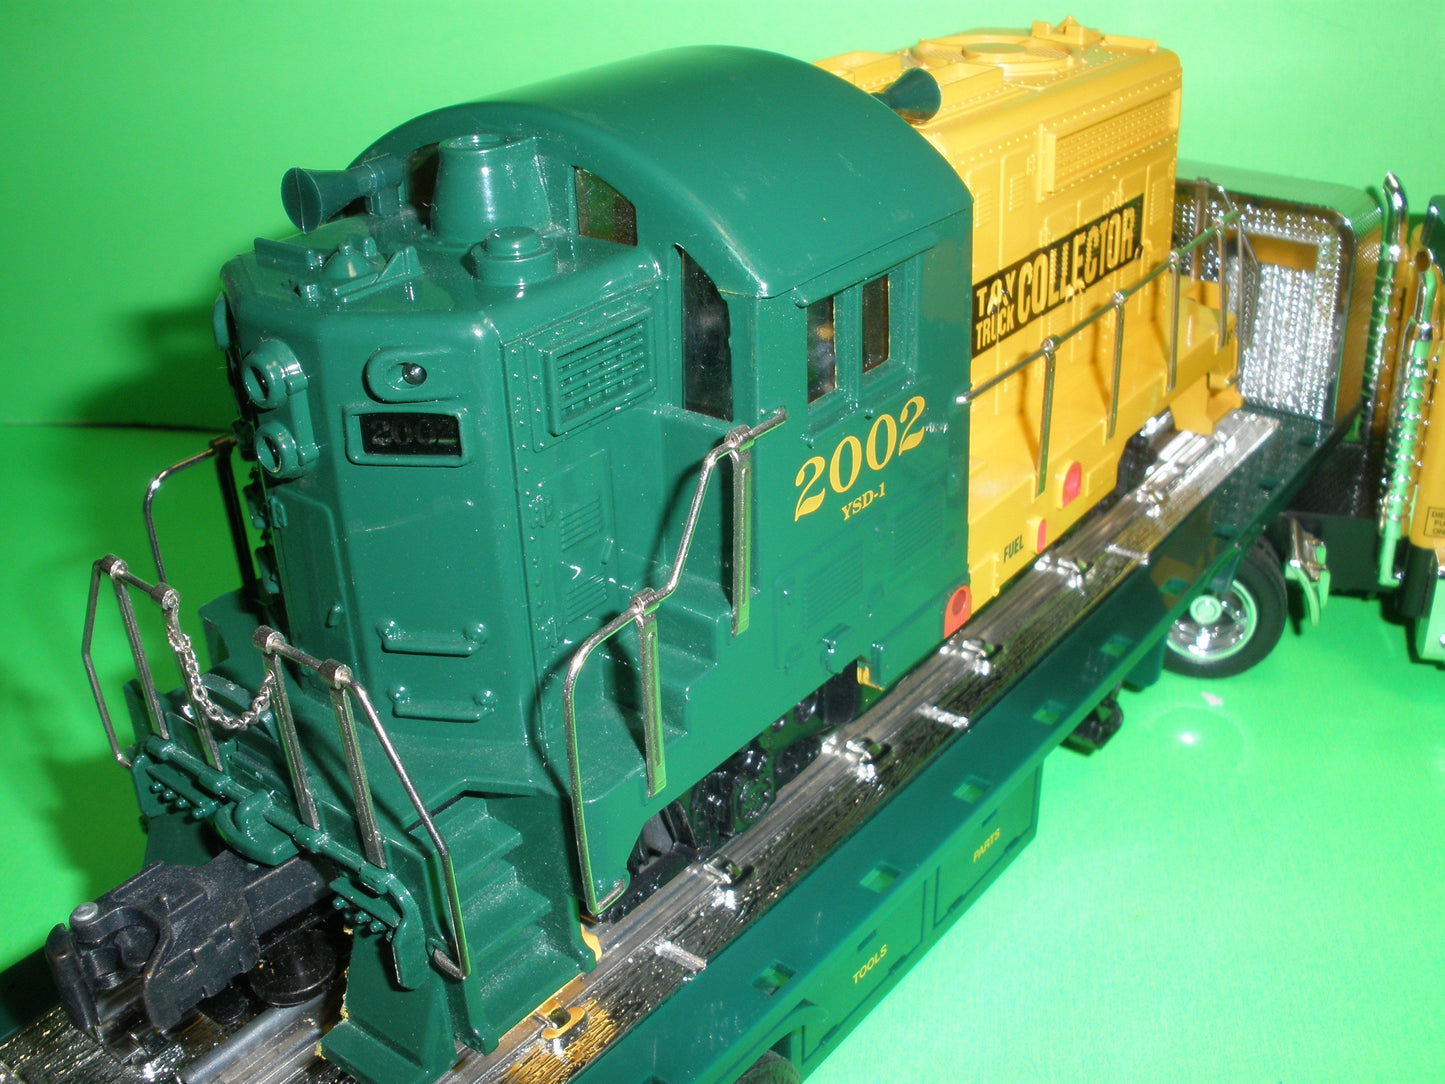 Toy Truck Collector Flatbed Truck & Powered Diesel Locomotive